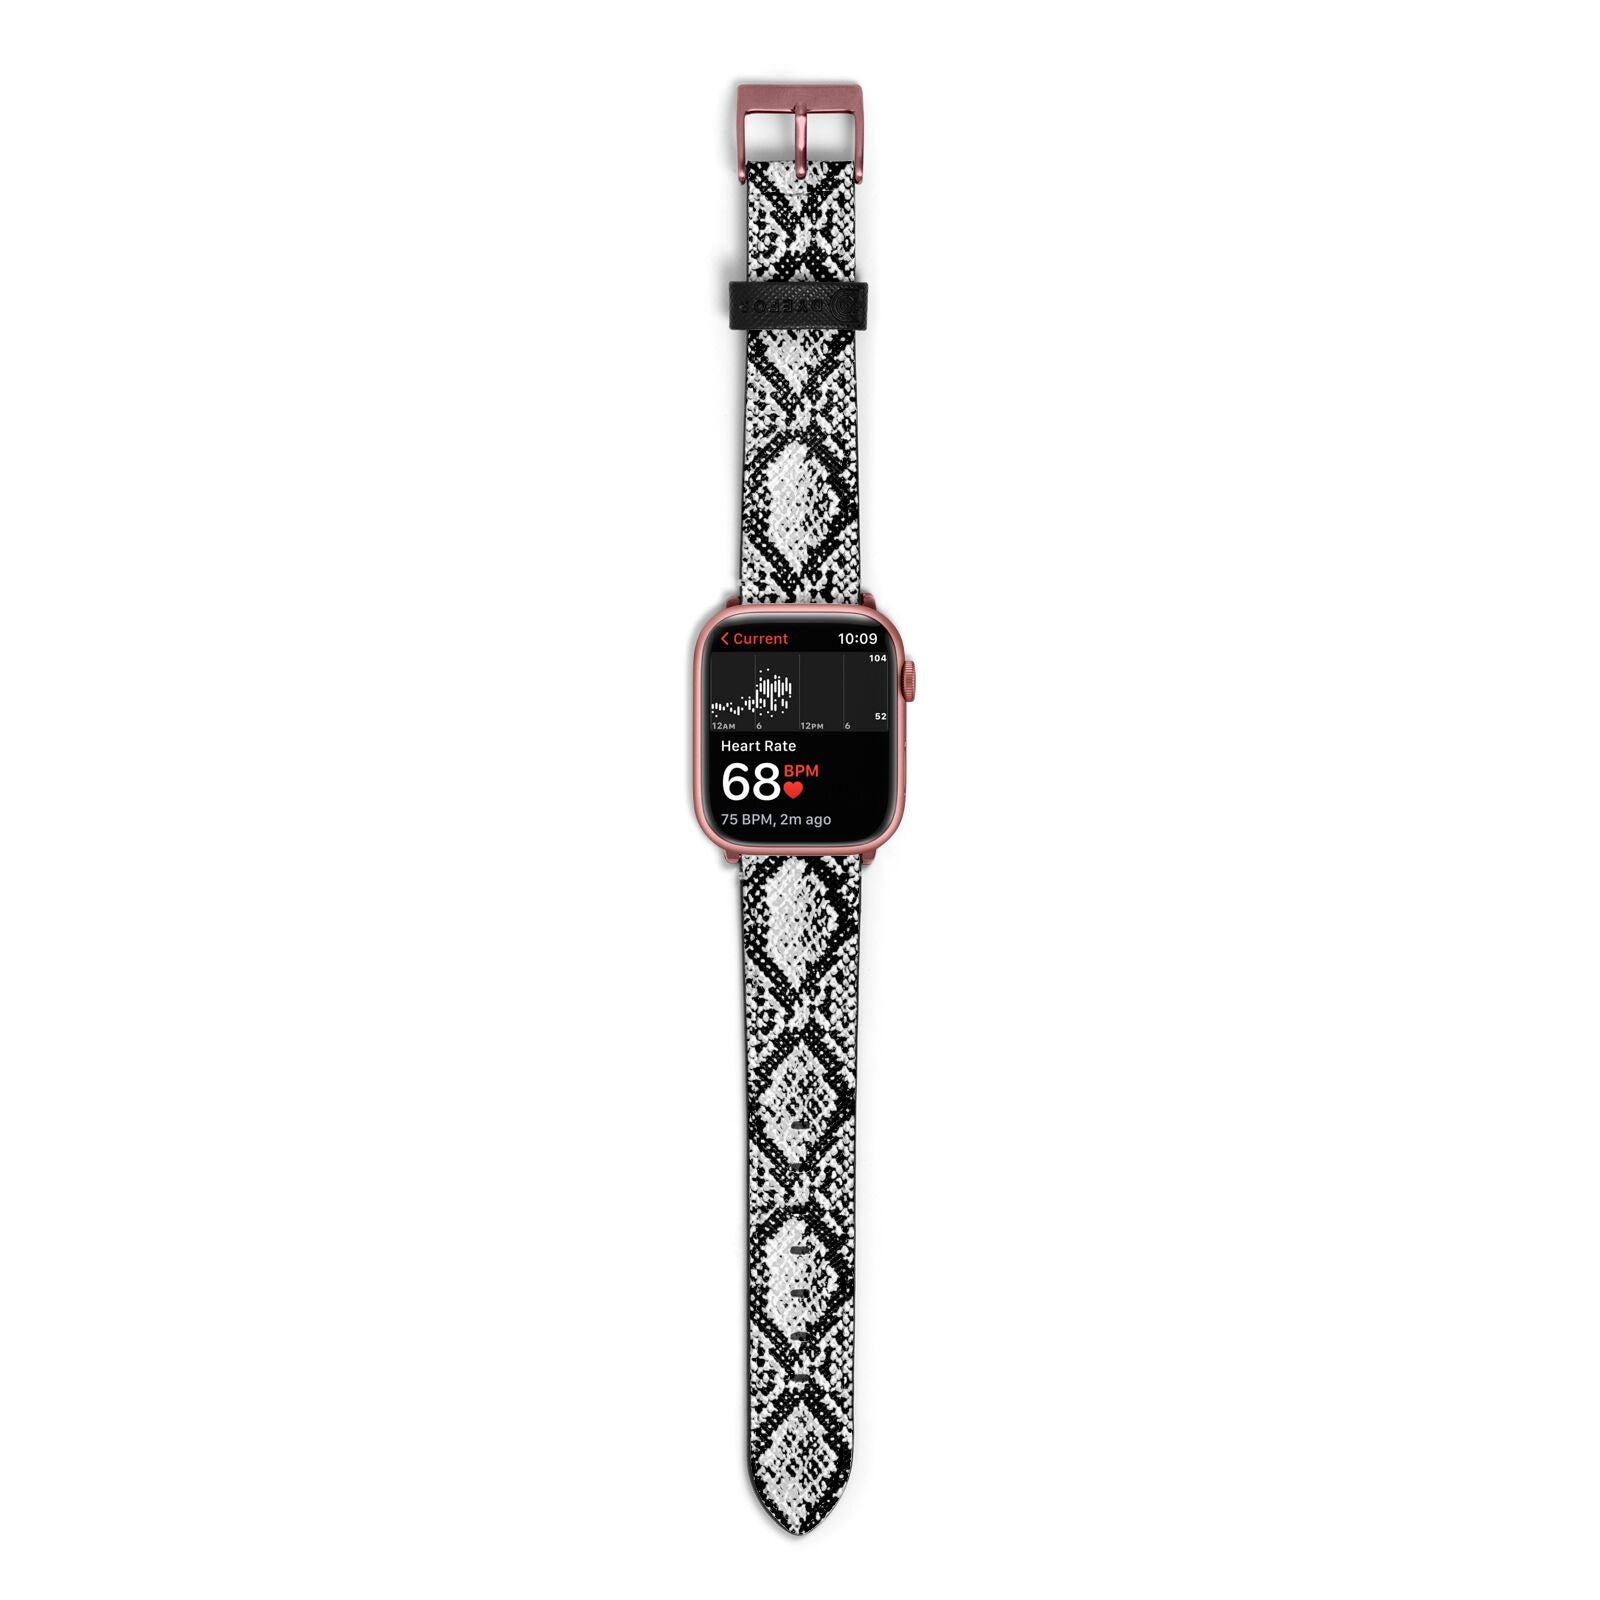 Black Snakeskin Apple Watch Strap Size 38mm with Rose Gold Hardware